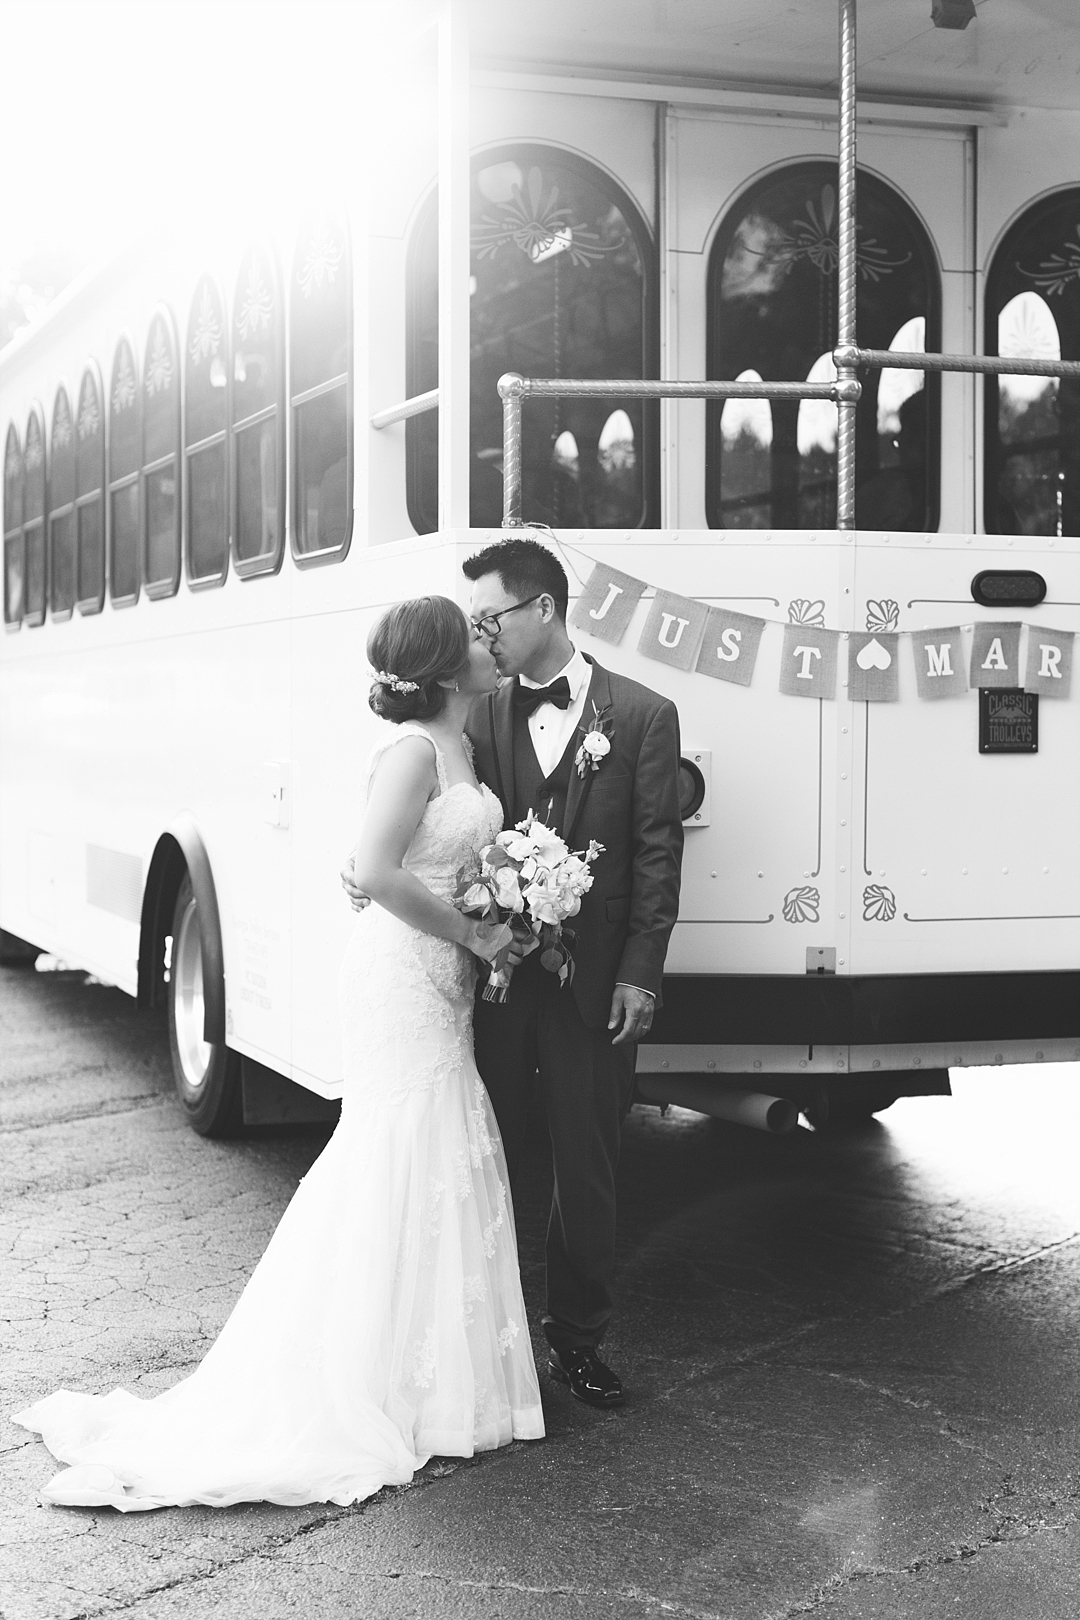 Just married_Photos by Rebecca Cerasani, Atlanta's premier engagement photographer